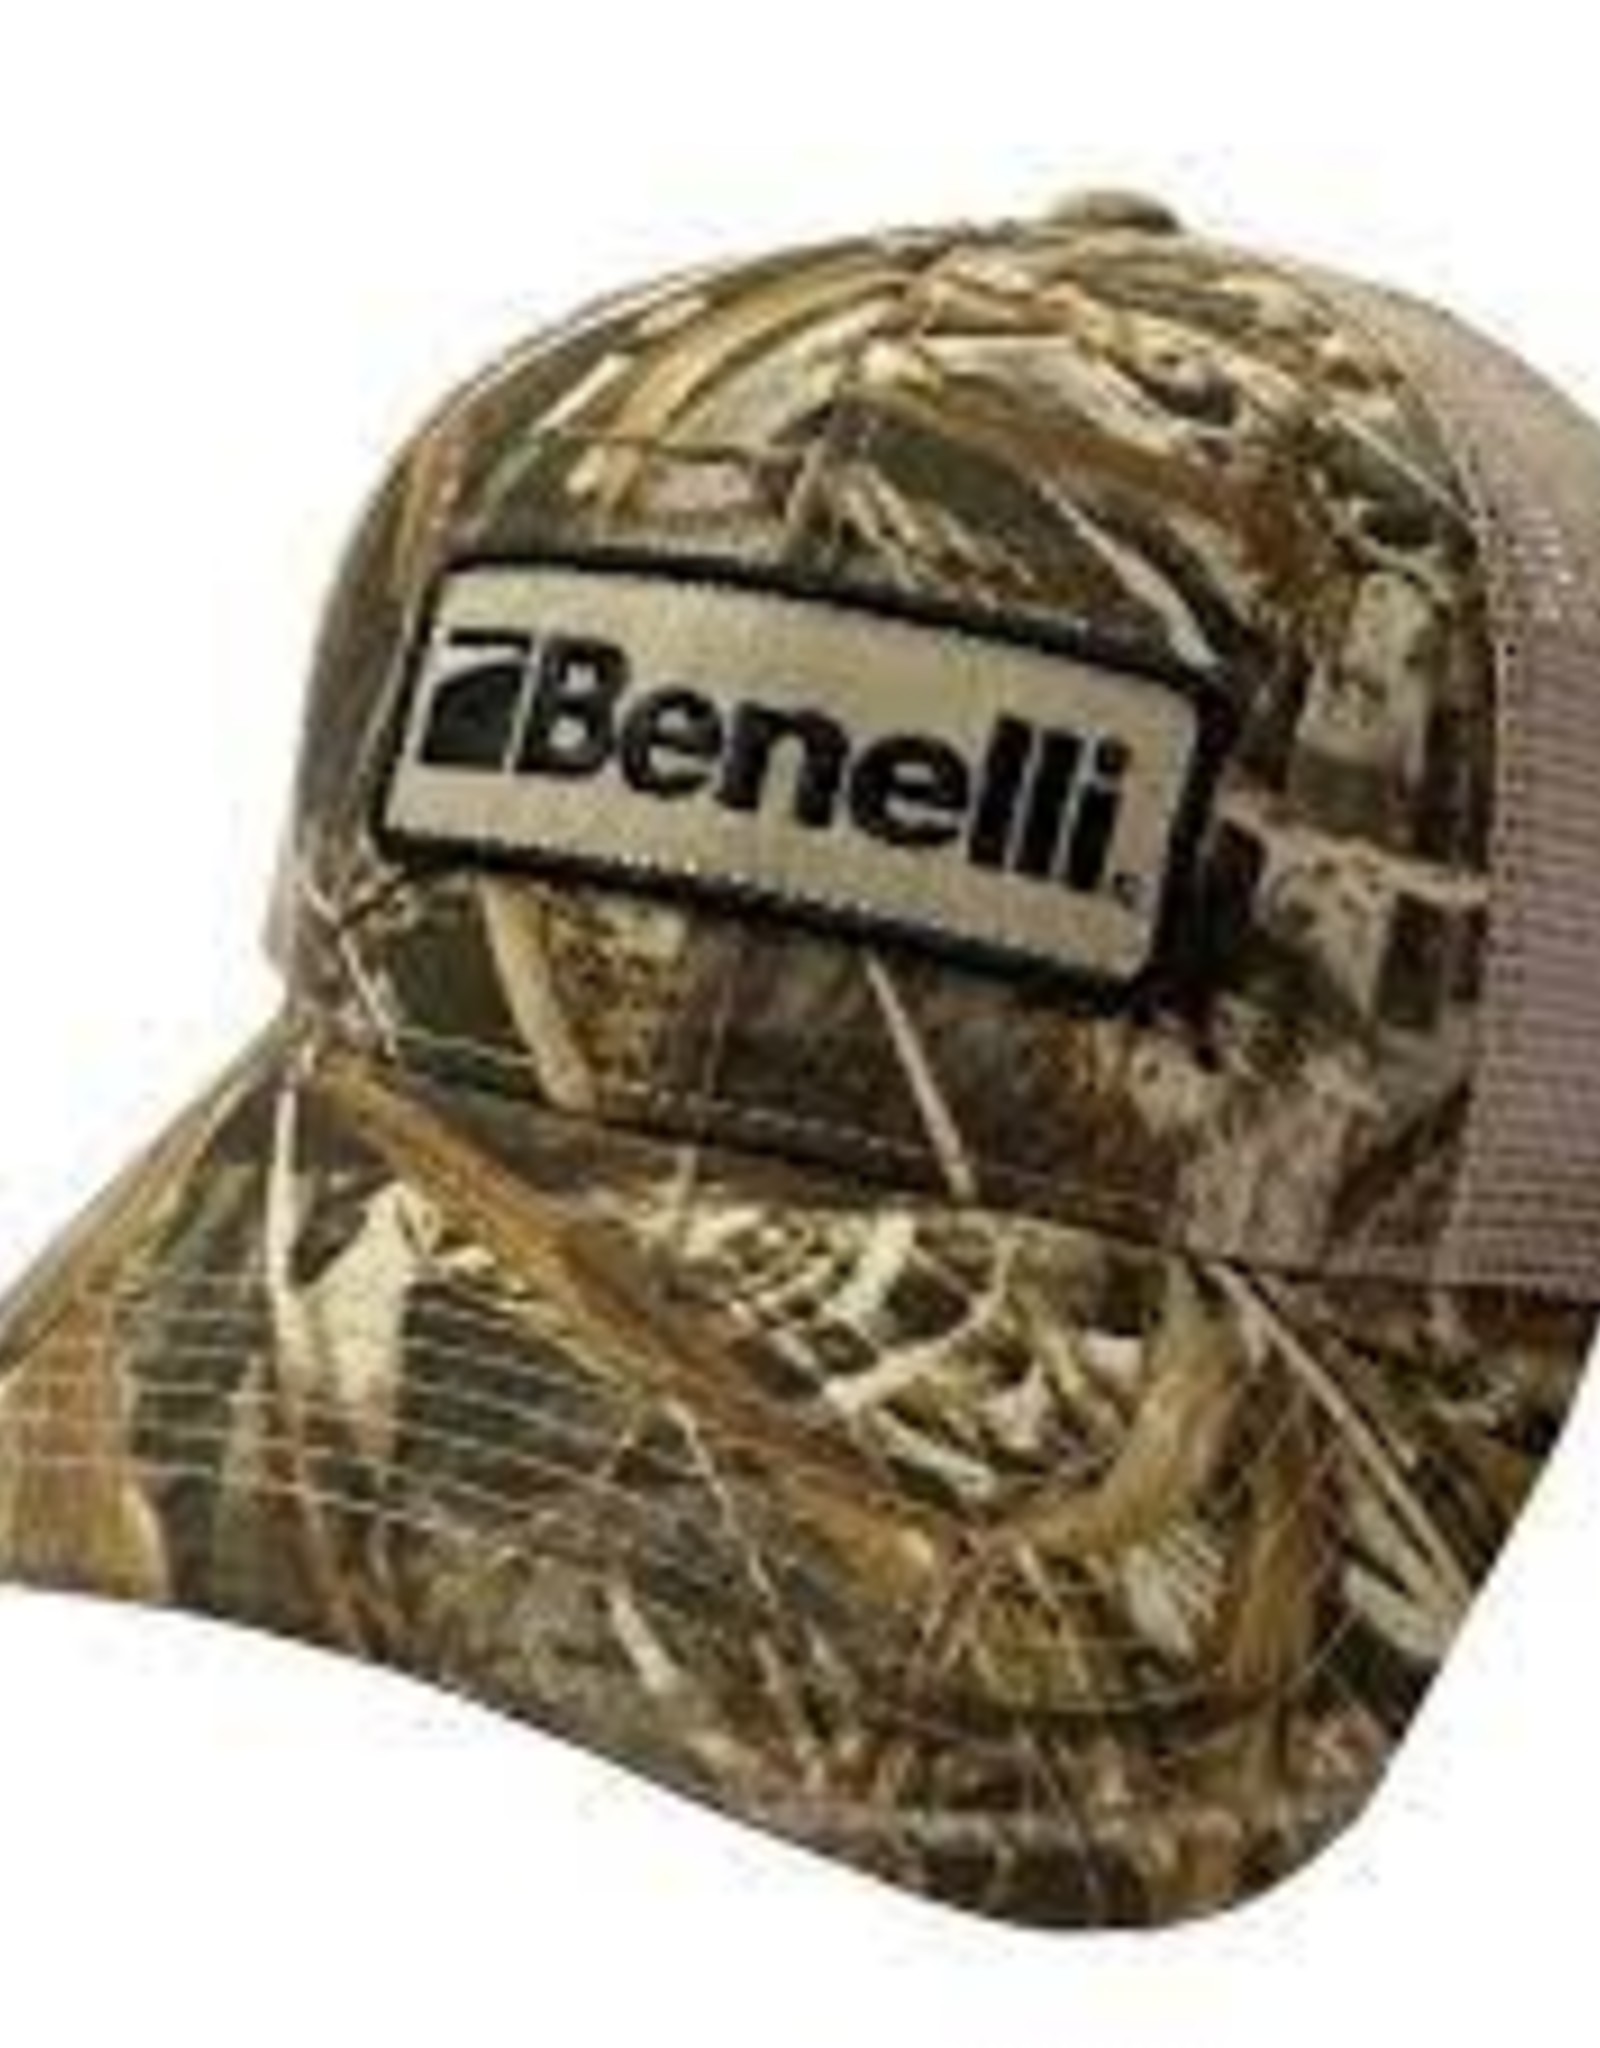 Benelli Trucker Hat Max-5 & Stone Mesh